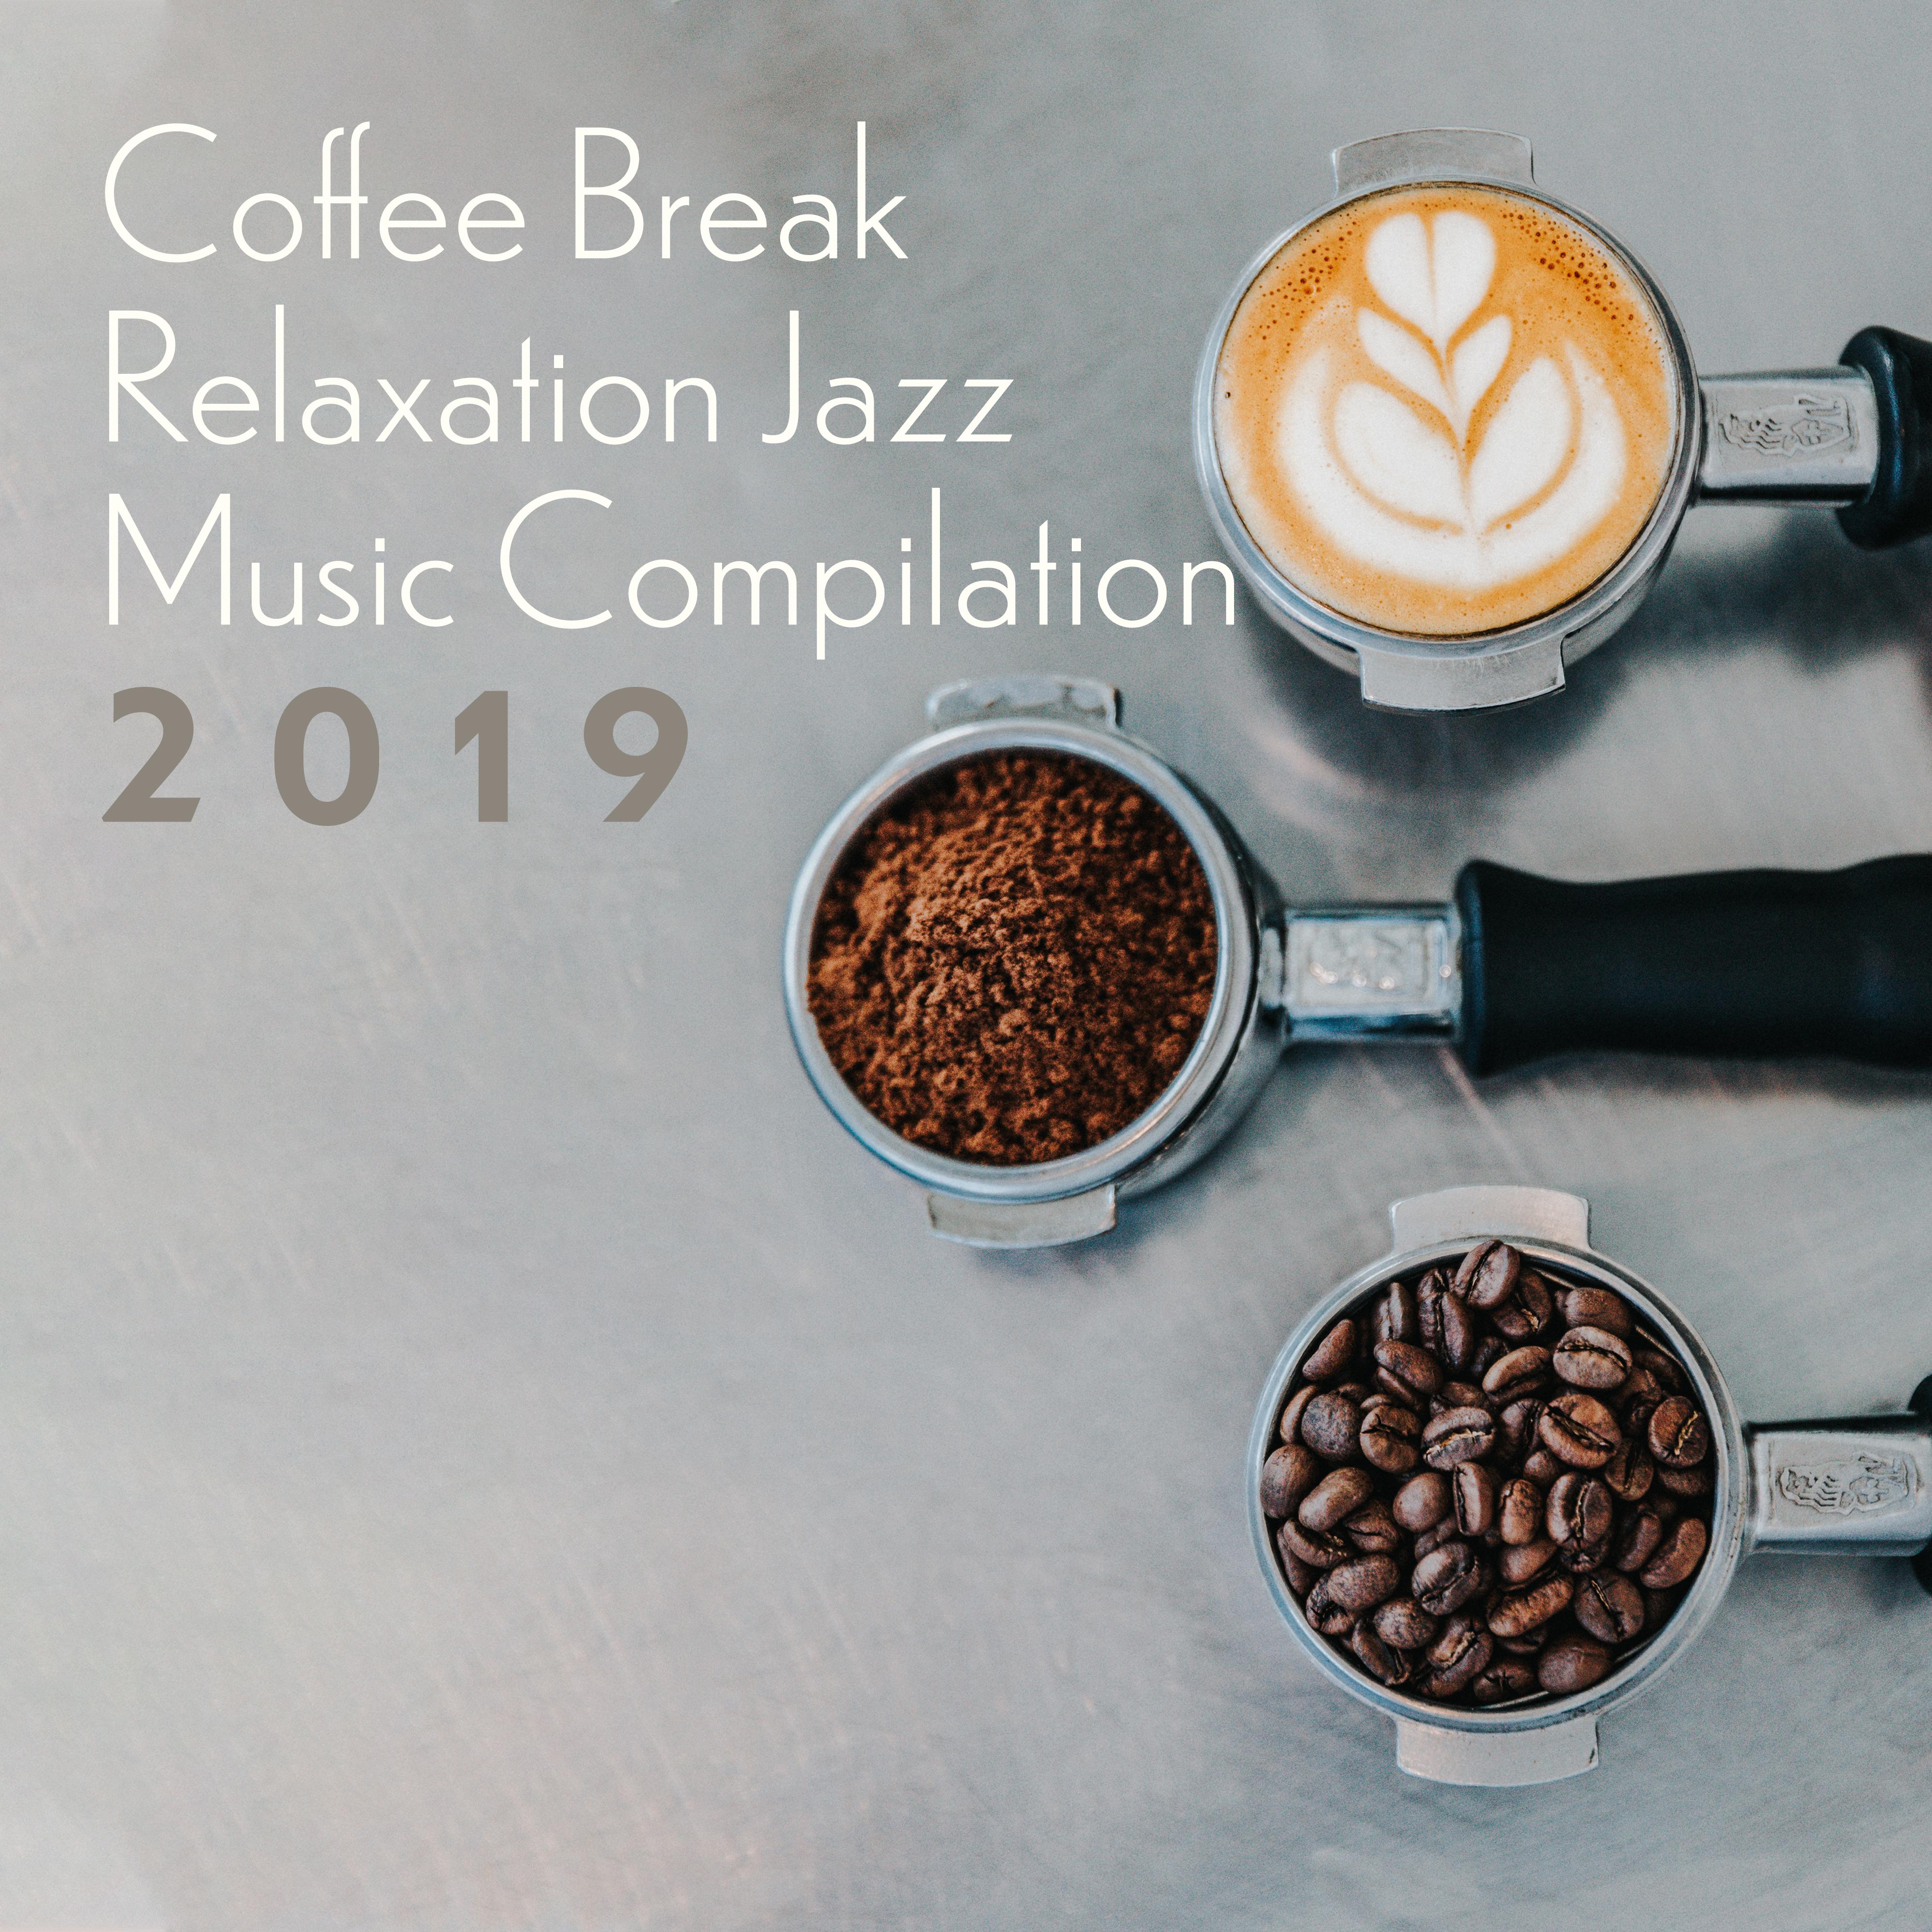 Coffee Break Relaxation Jazz Music Compilation 2019